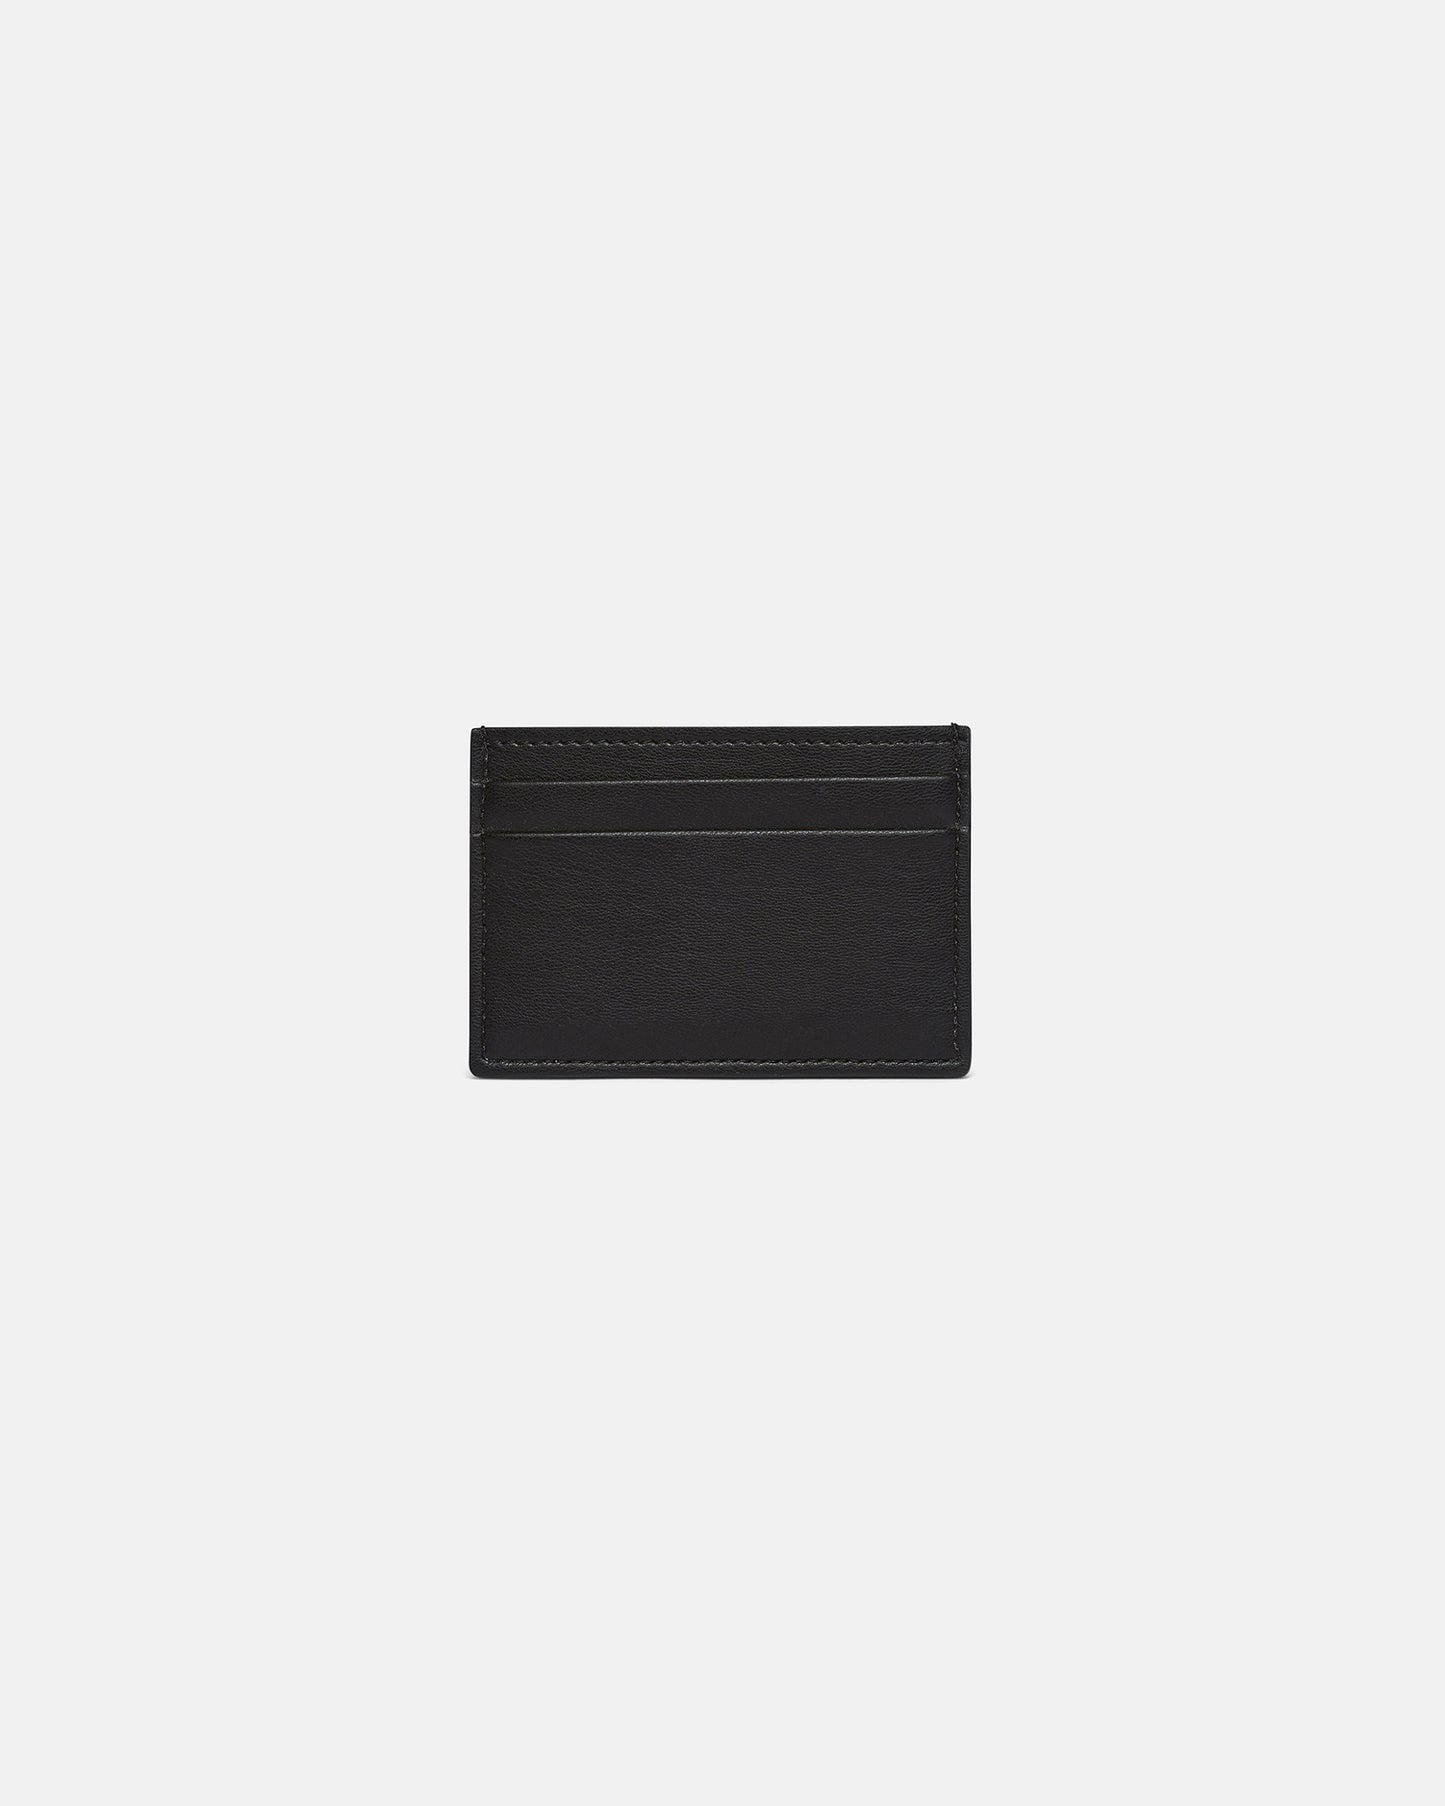 Gilbert - Alt-Leather Cardholder - Black